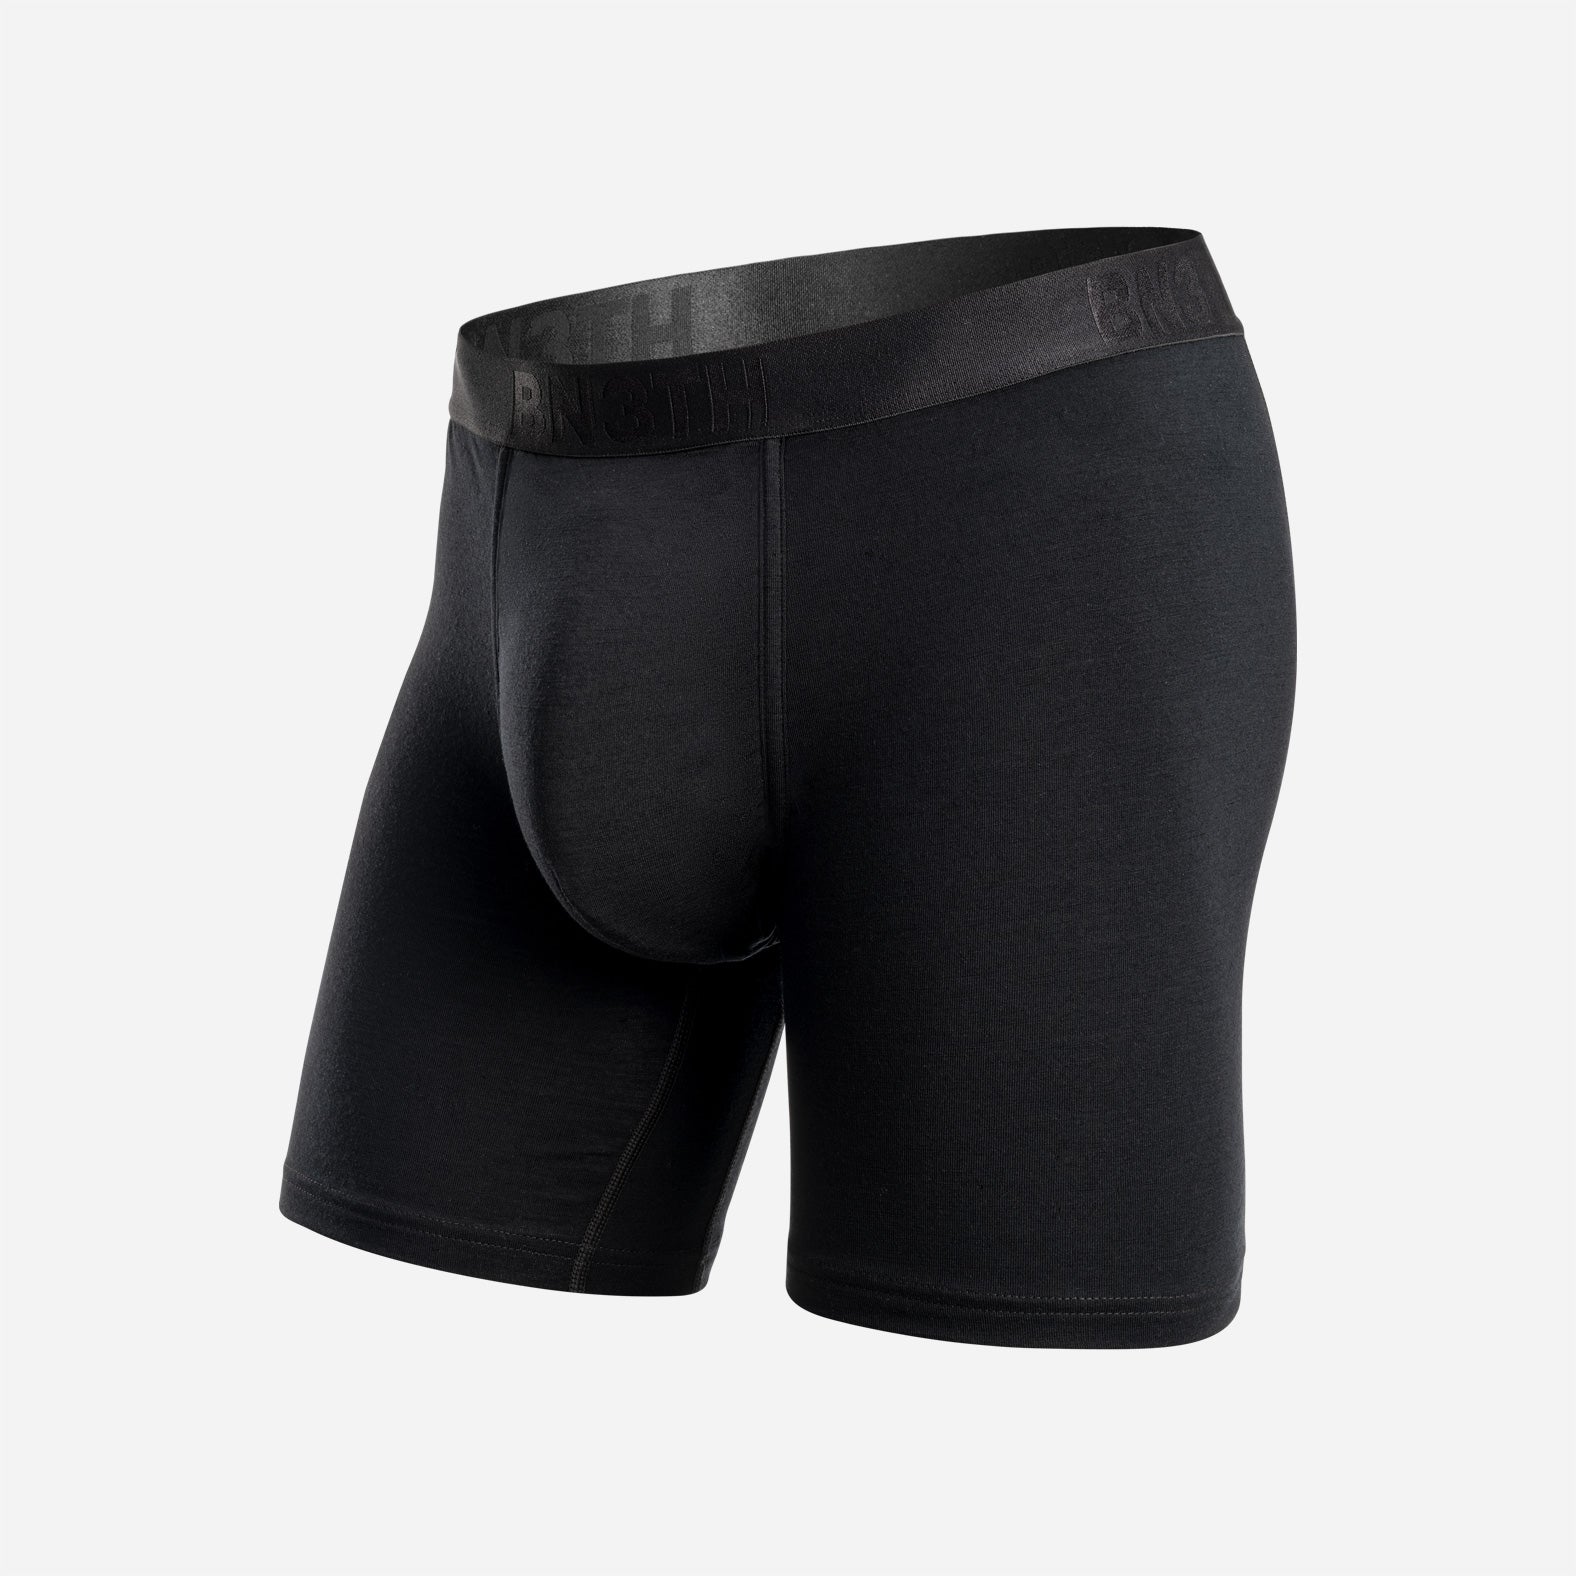 MERIWOOL Merino Wool Men's Boxer Brief Underwear 